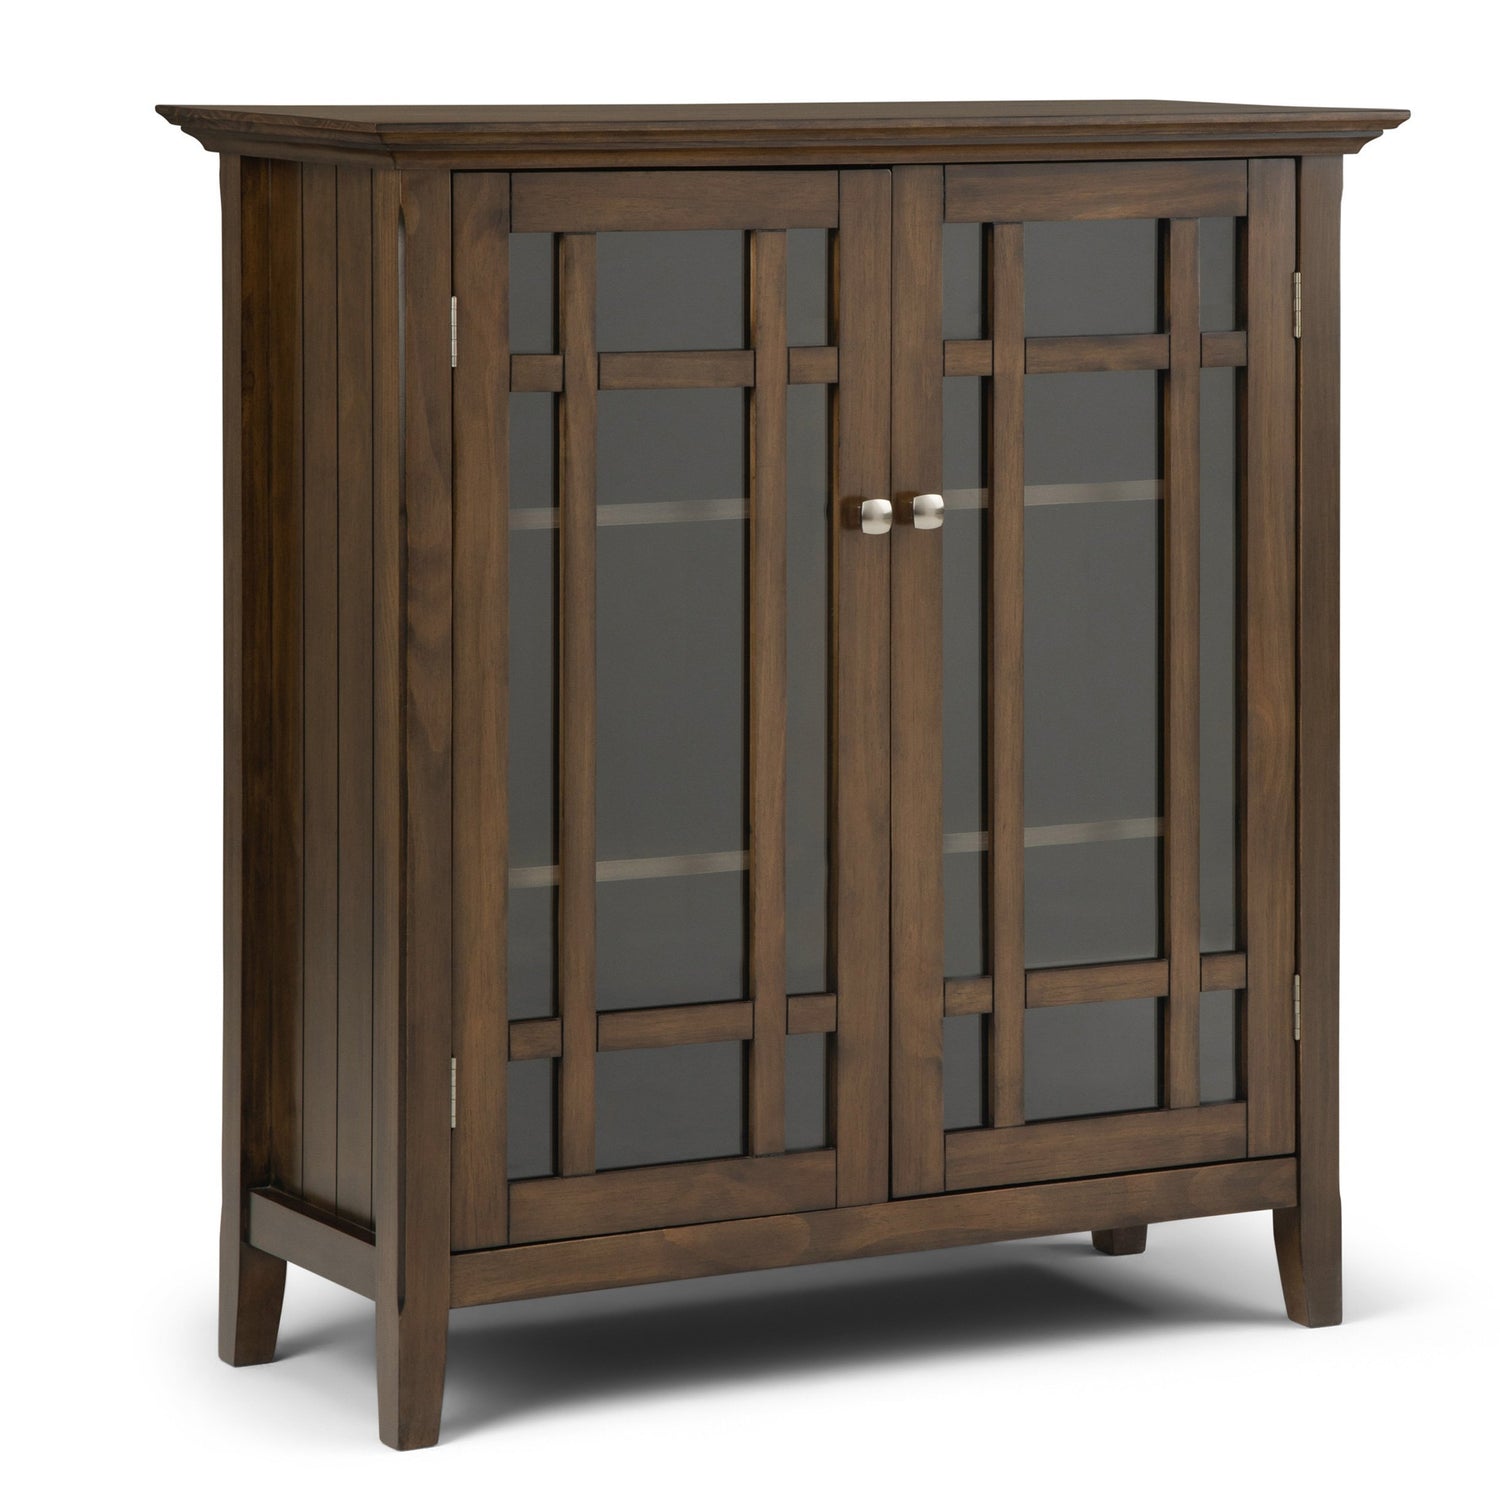 Rustic Natural Aged Brown | Bedford Medium Storage Cabinet